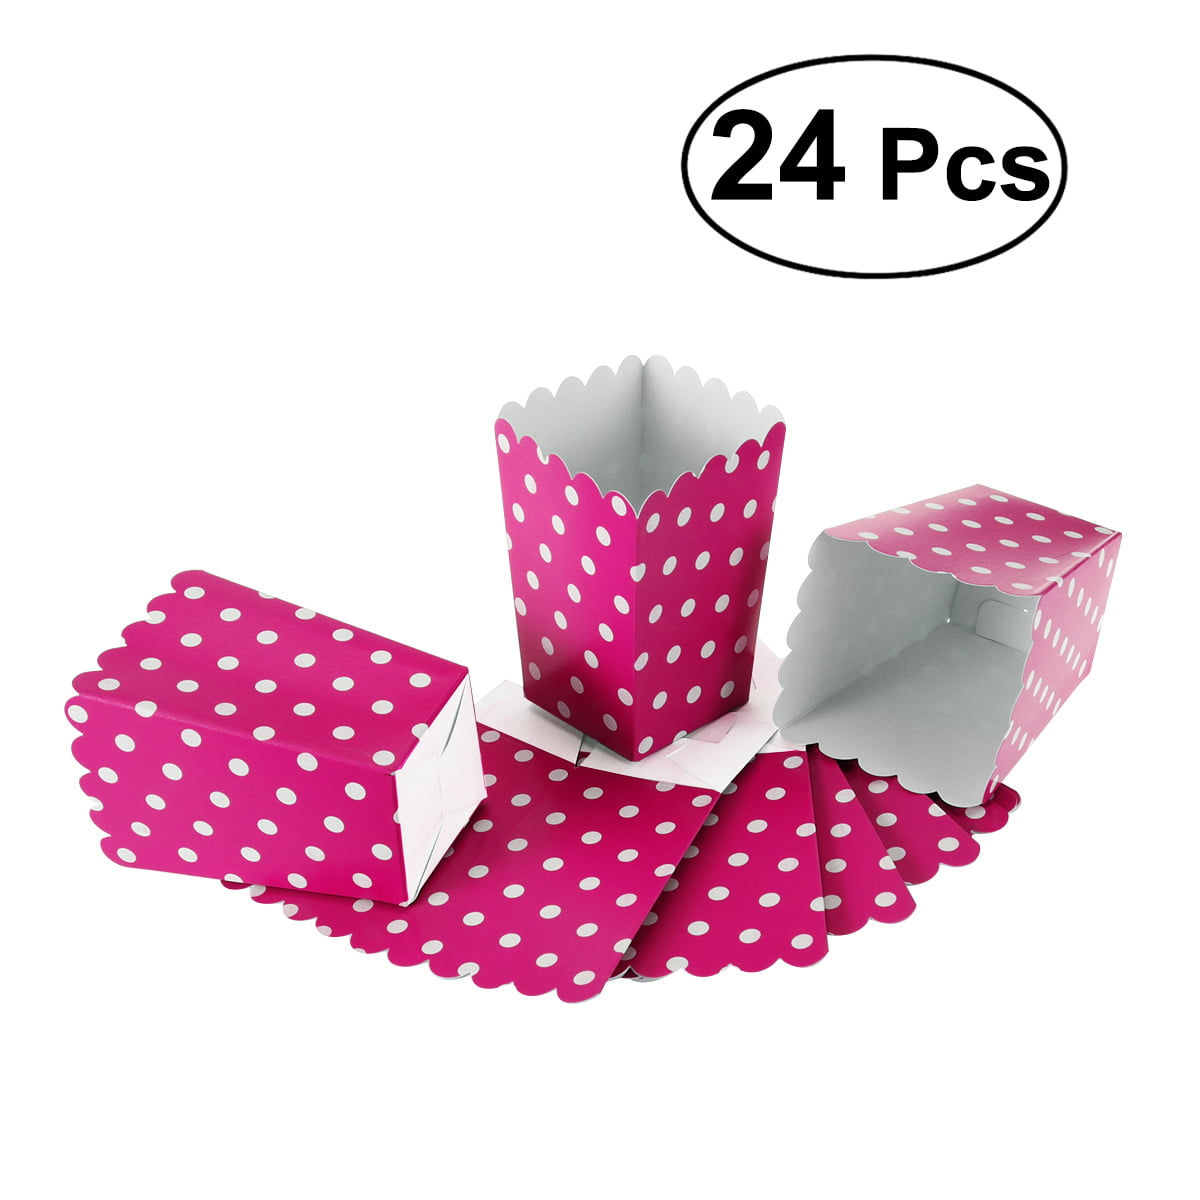 24pcs Striped Poka Dot Paper Popcorn Boxes Bags Container Wedding Party Favour 